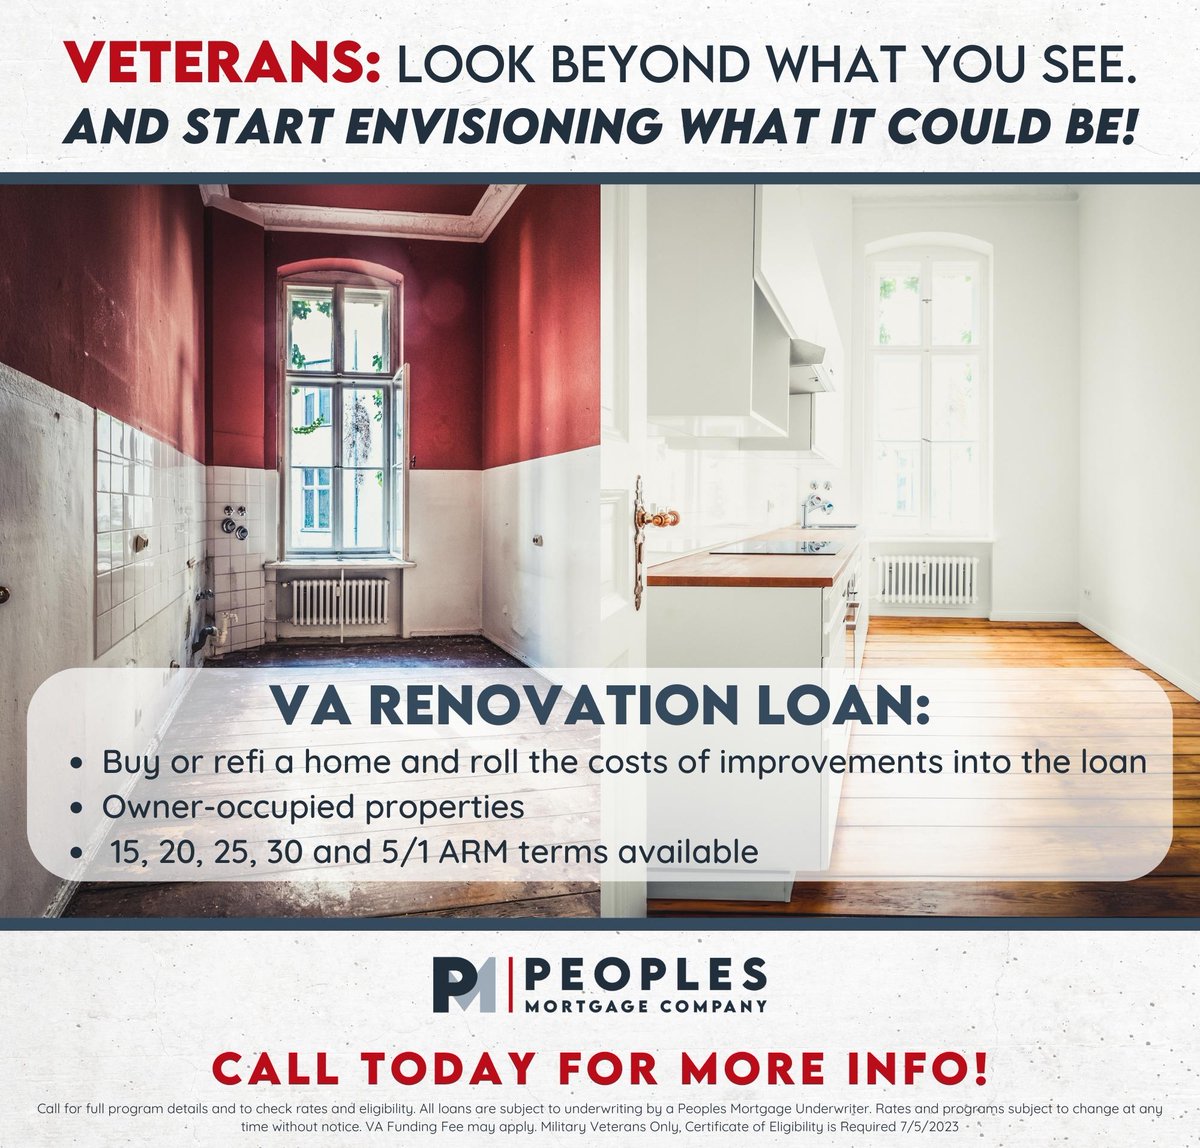 Veterans, imagine the endless possibilities. We can help you get there! #PeoplesMortgage #allaboutthepeople #vahomeloans #VArenovation #homerenovation #VA #Veterans linktr.ee/francomanueli